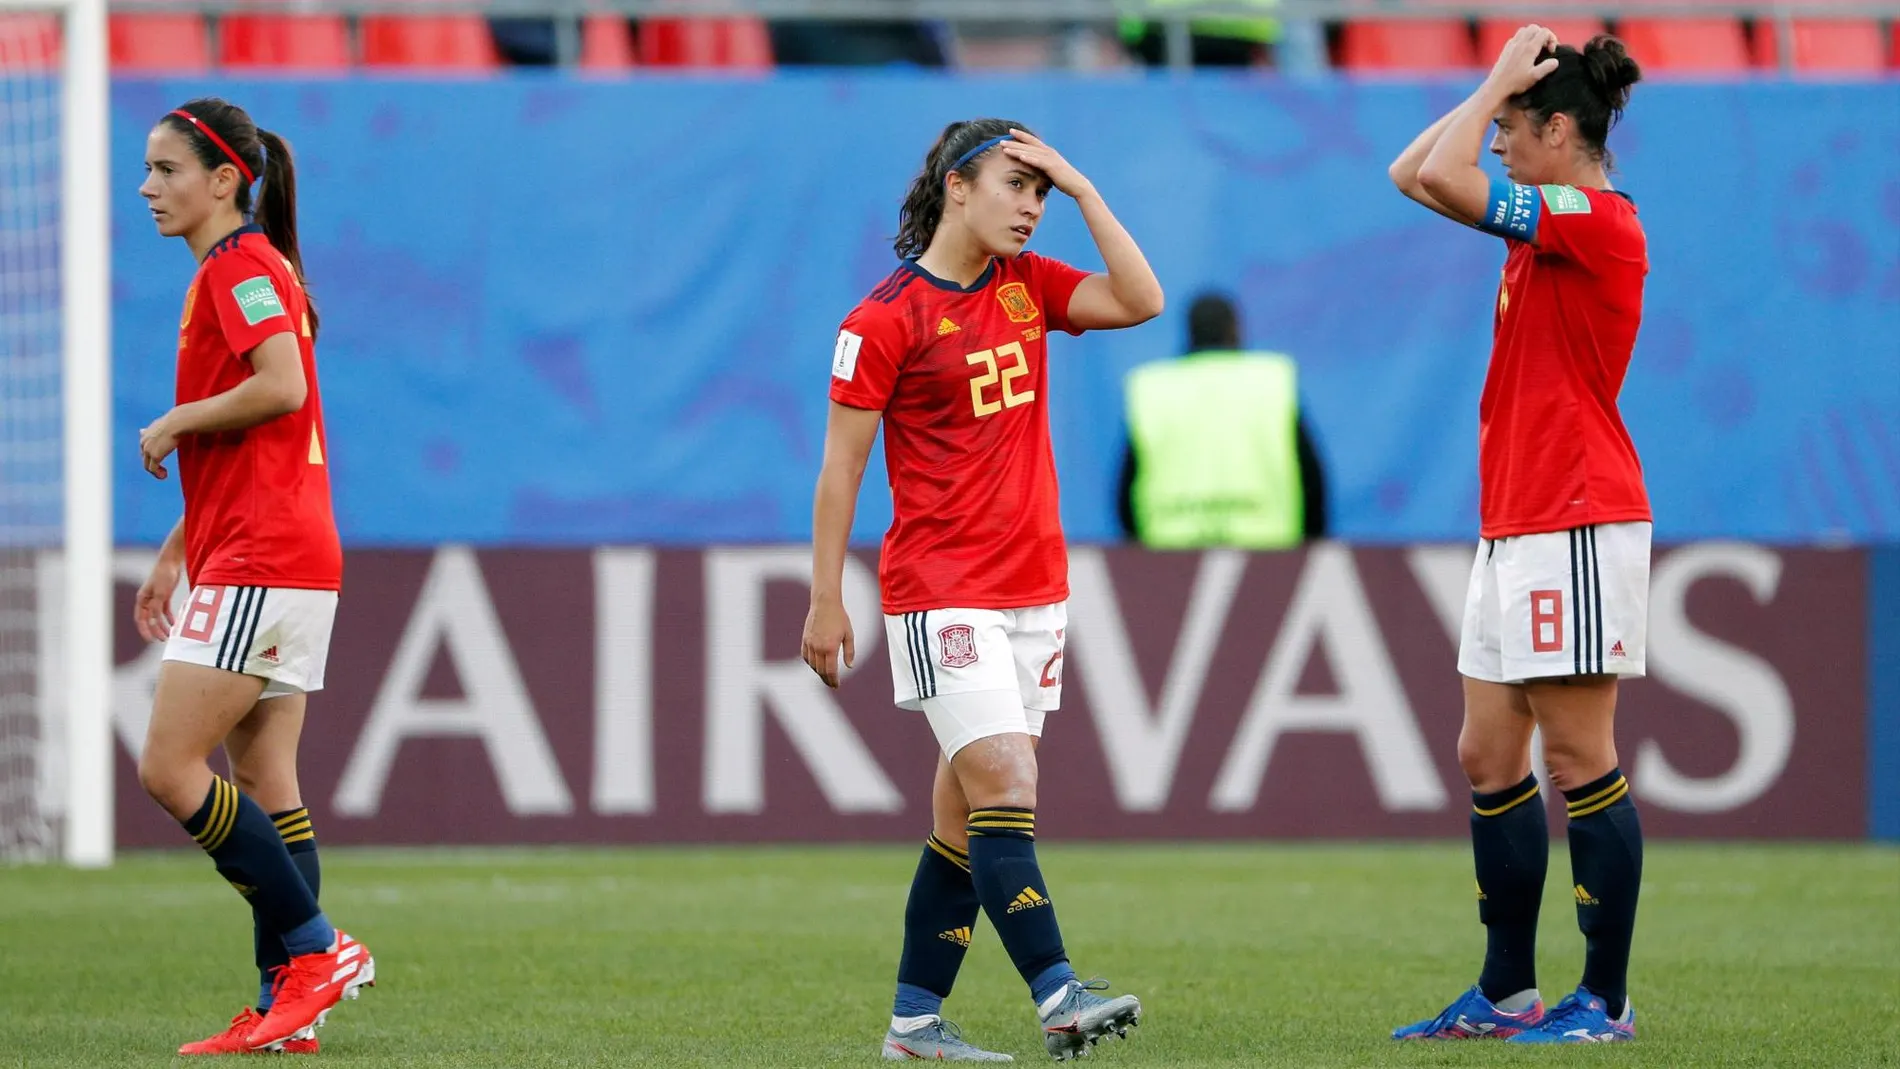 [Aitana Bonmatí (i), Nahikari García (c) y Marta Torrejón, reaccionan al finalizar el partido del mundial]